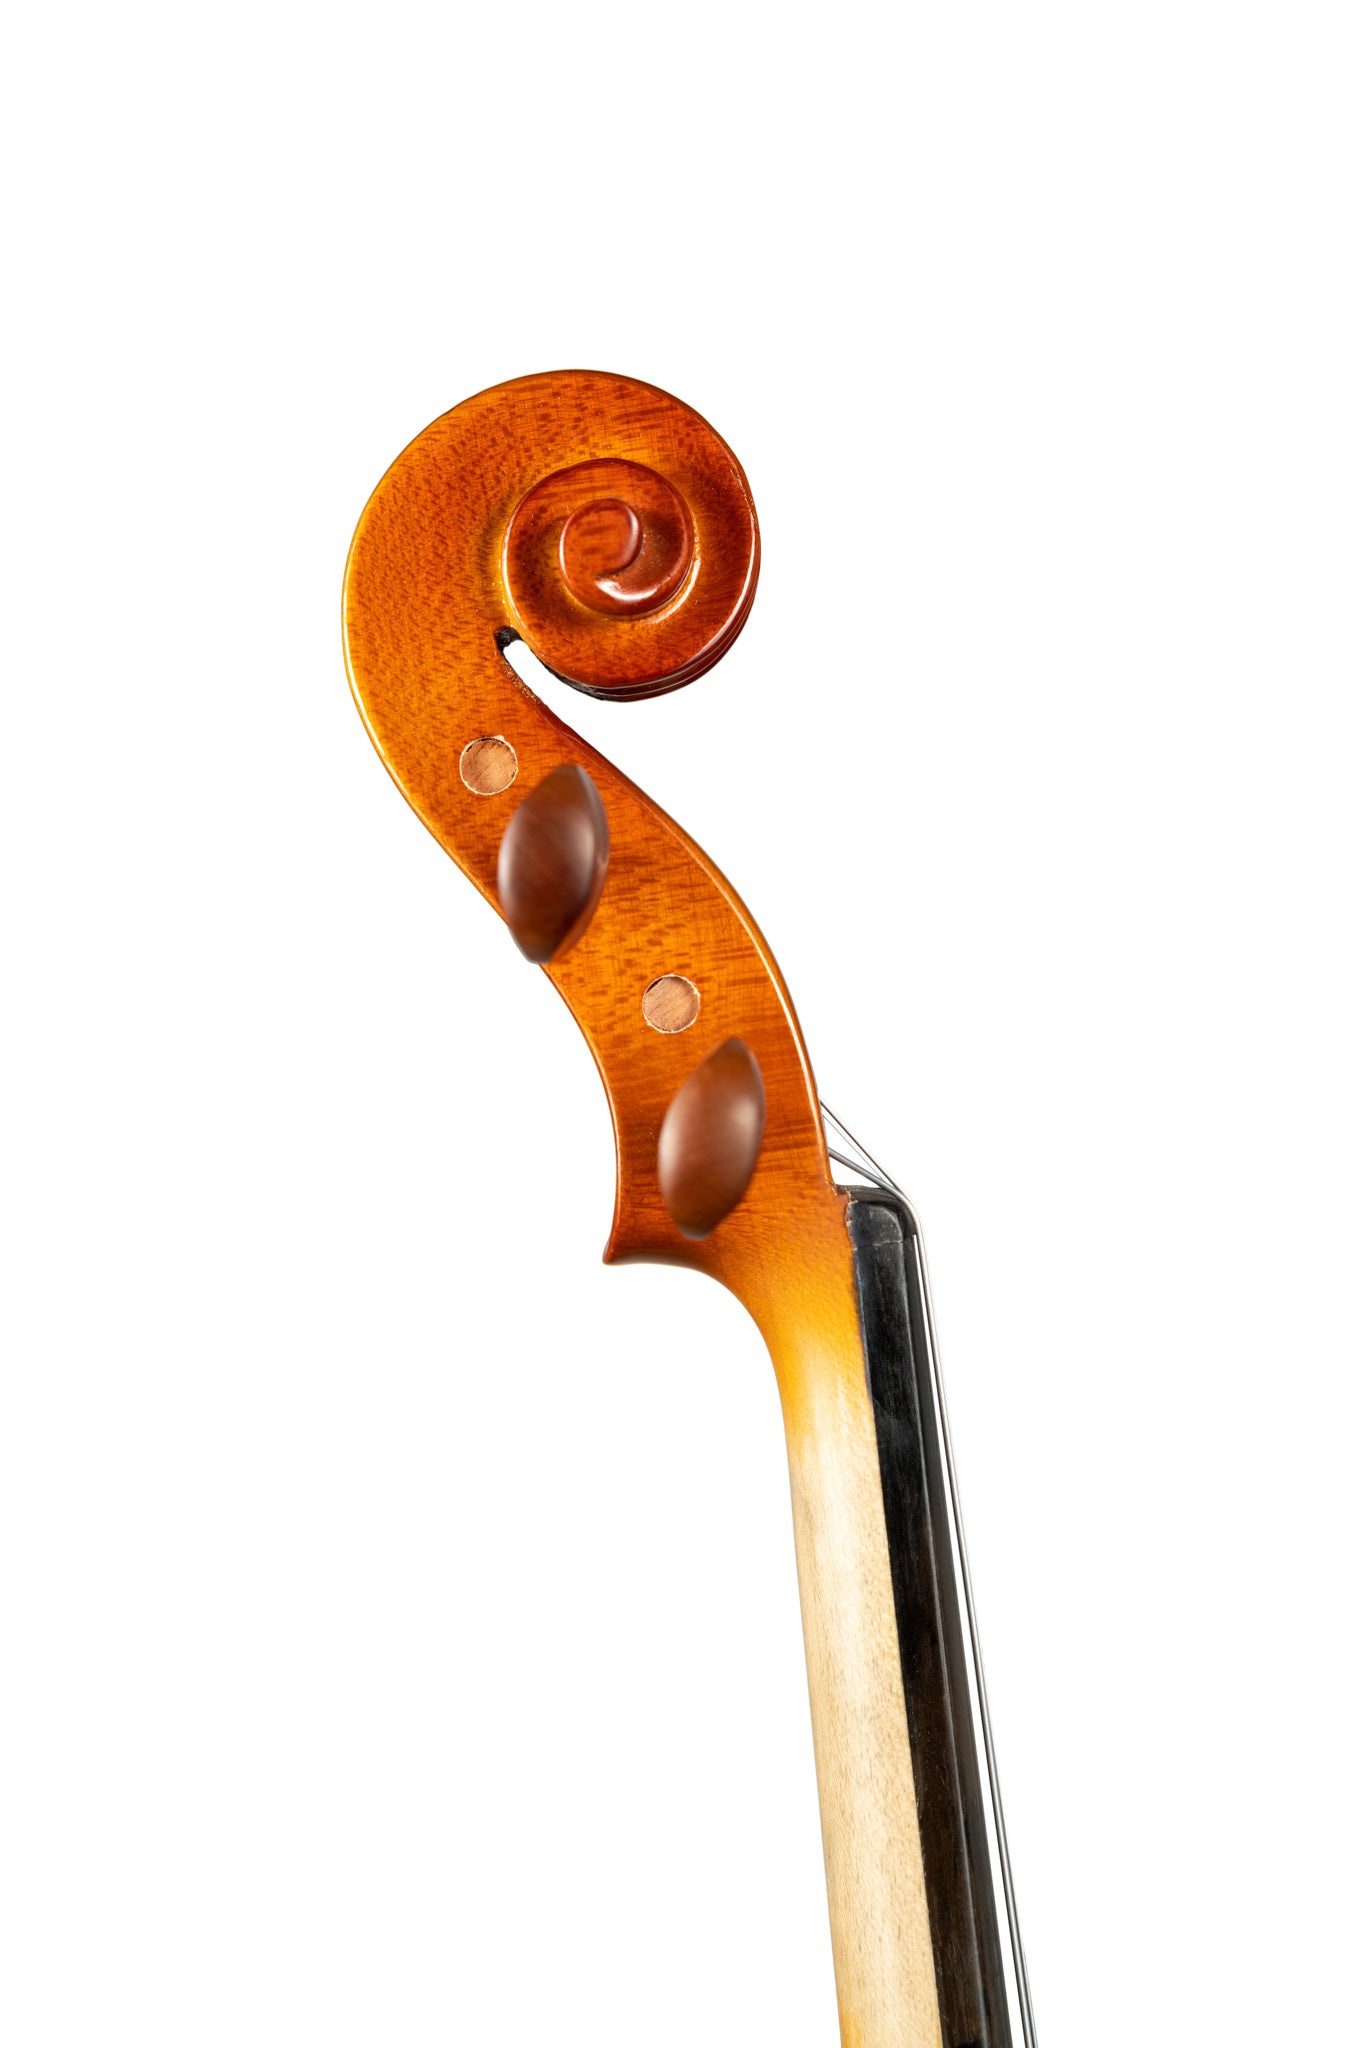 WY-150 Solidwood Beginner Violin